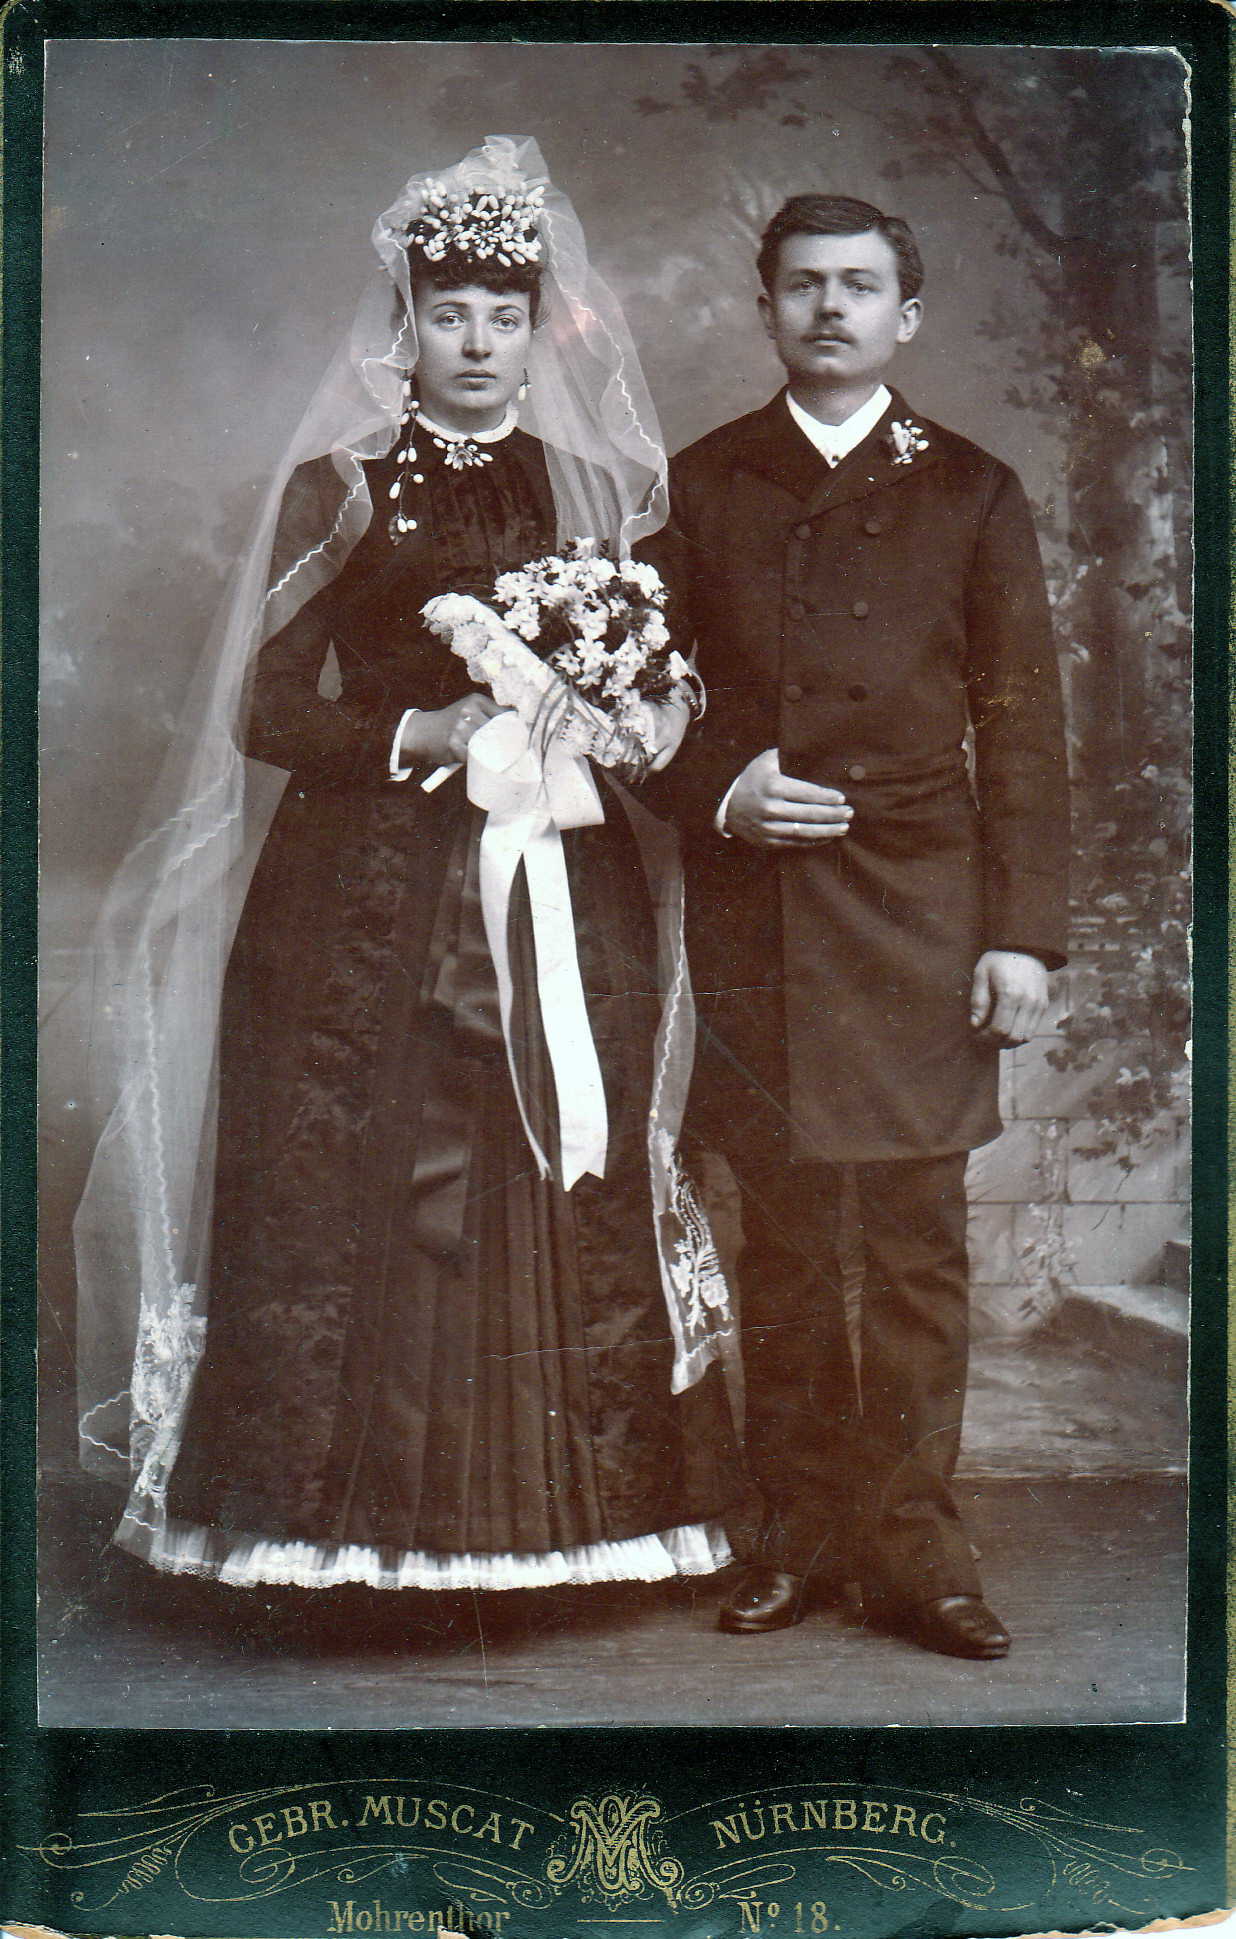 Old wedding photo